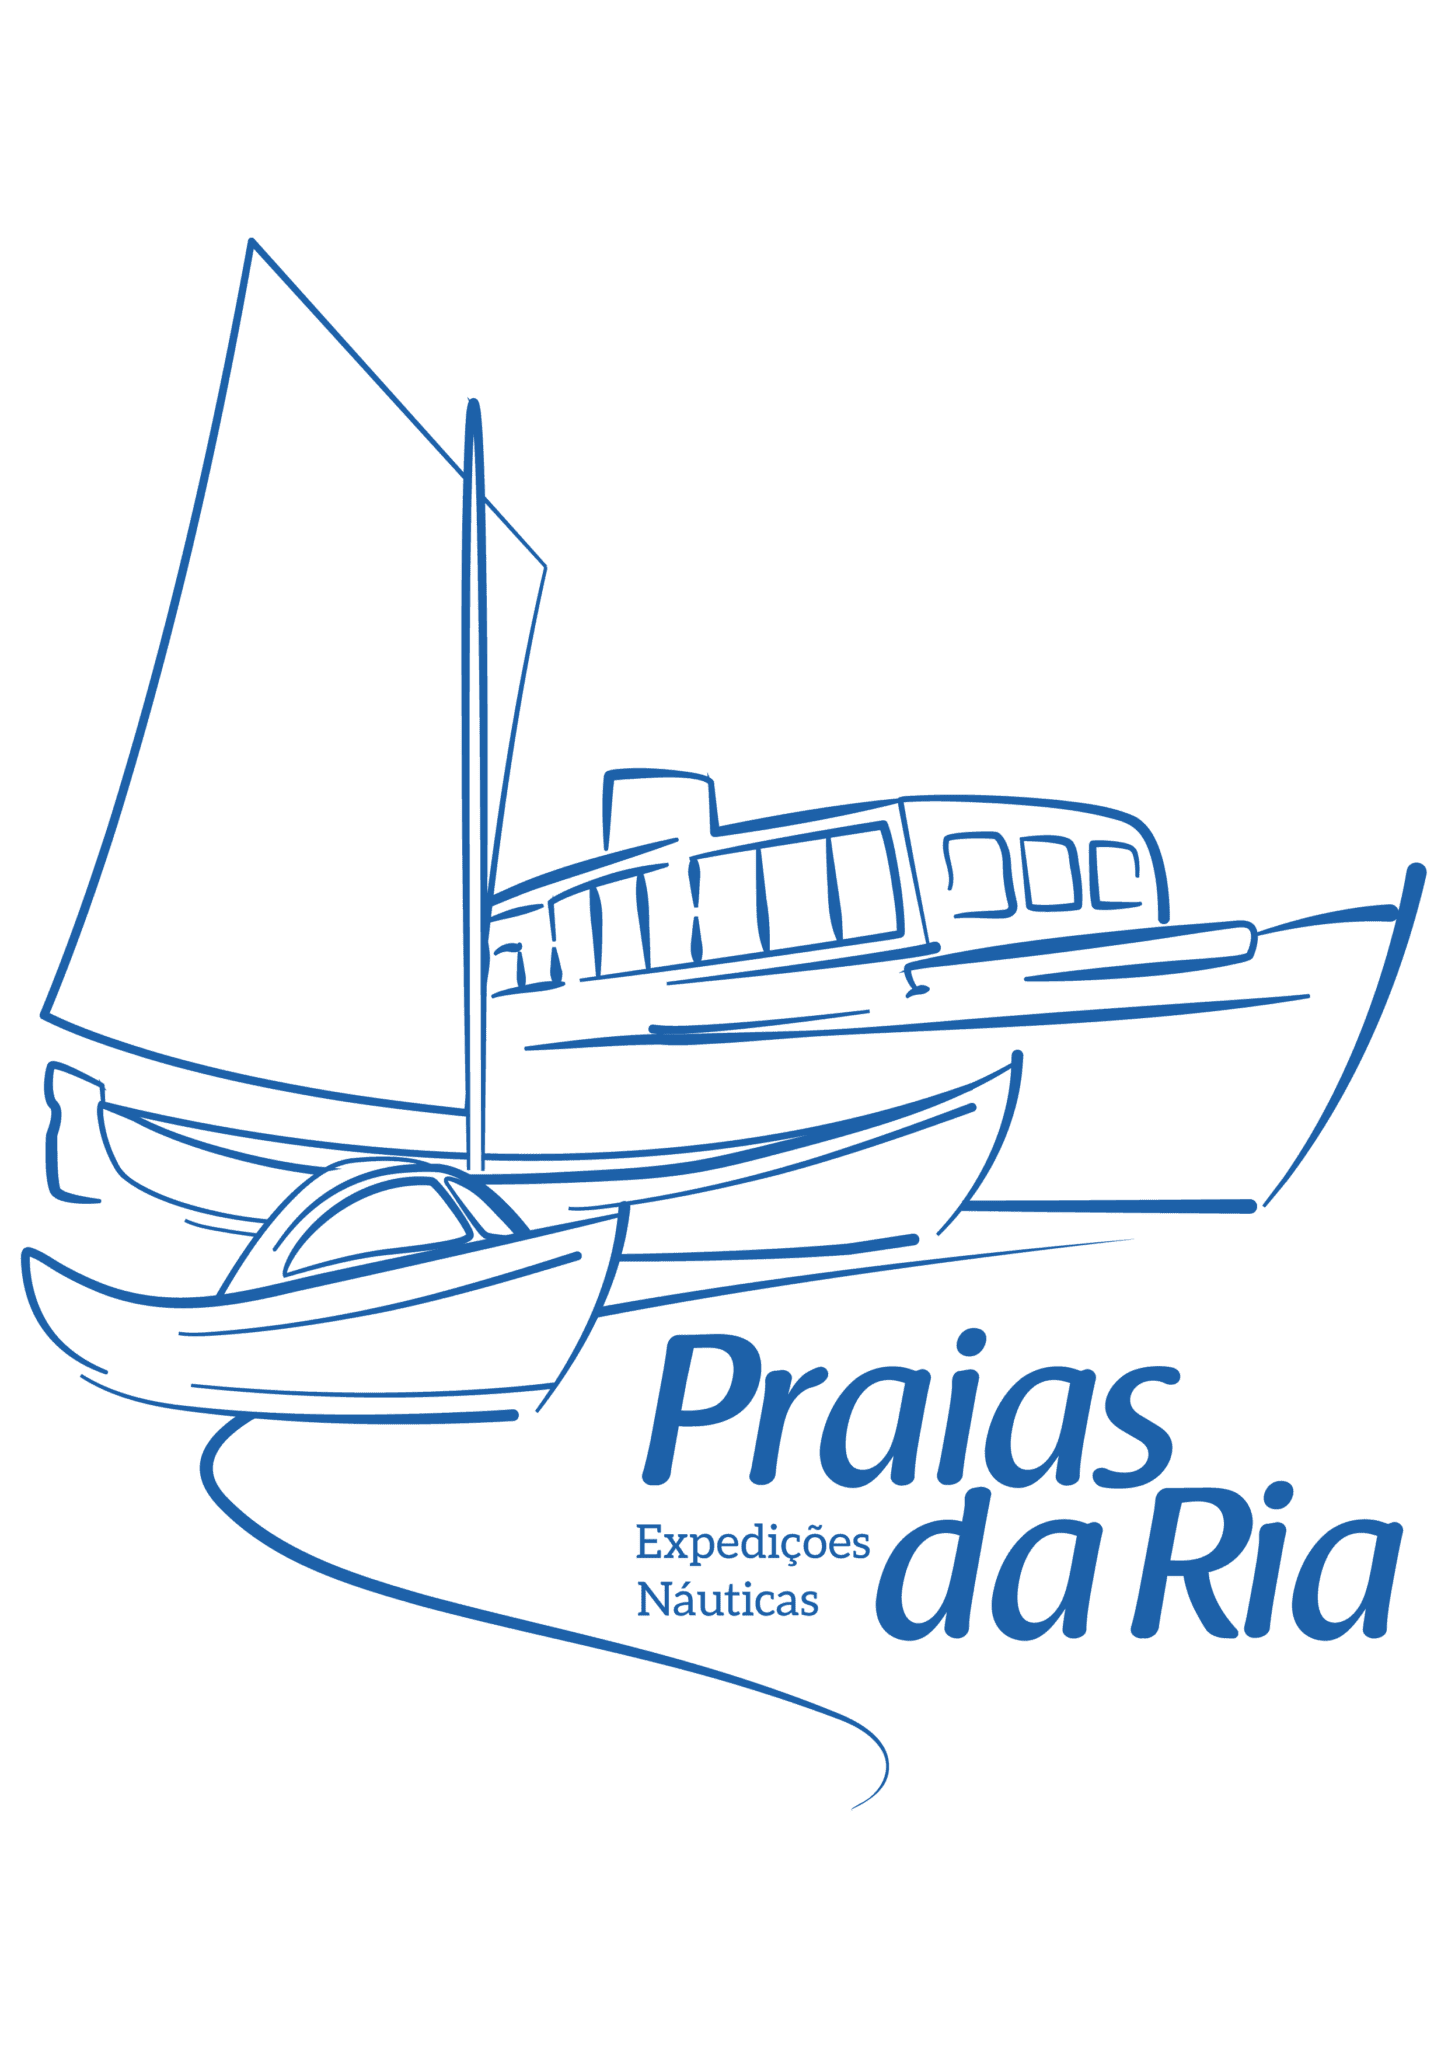 Praias da Ria – Unique Boat Tours